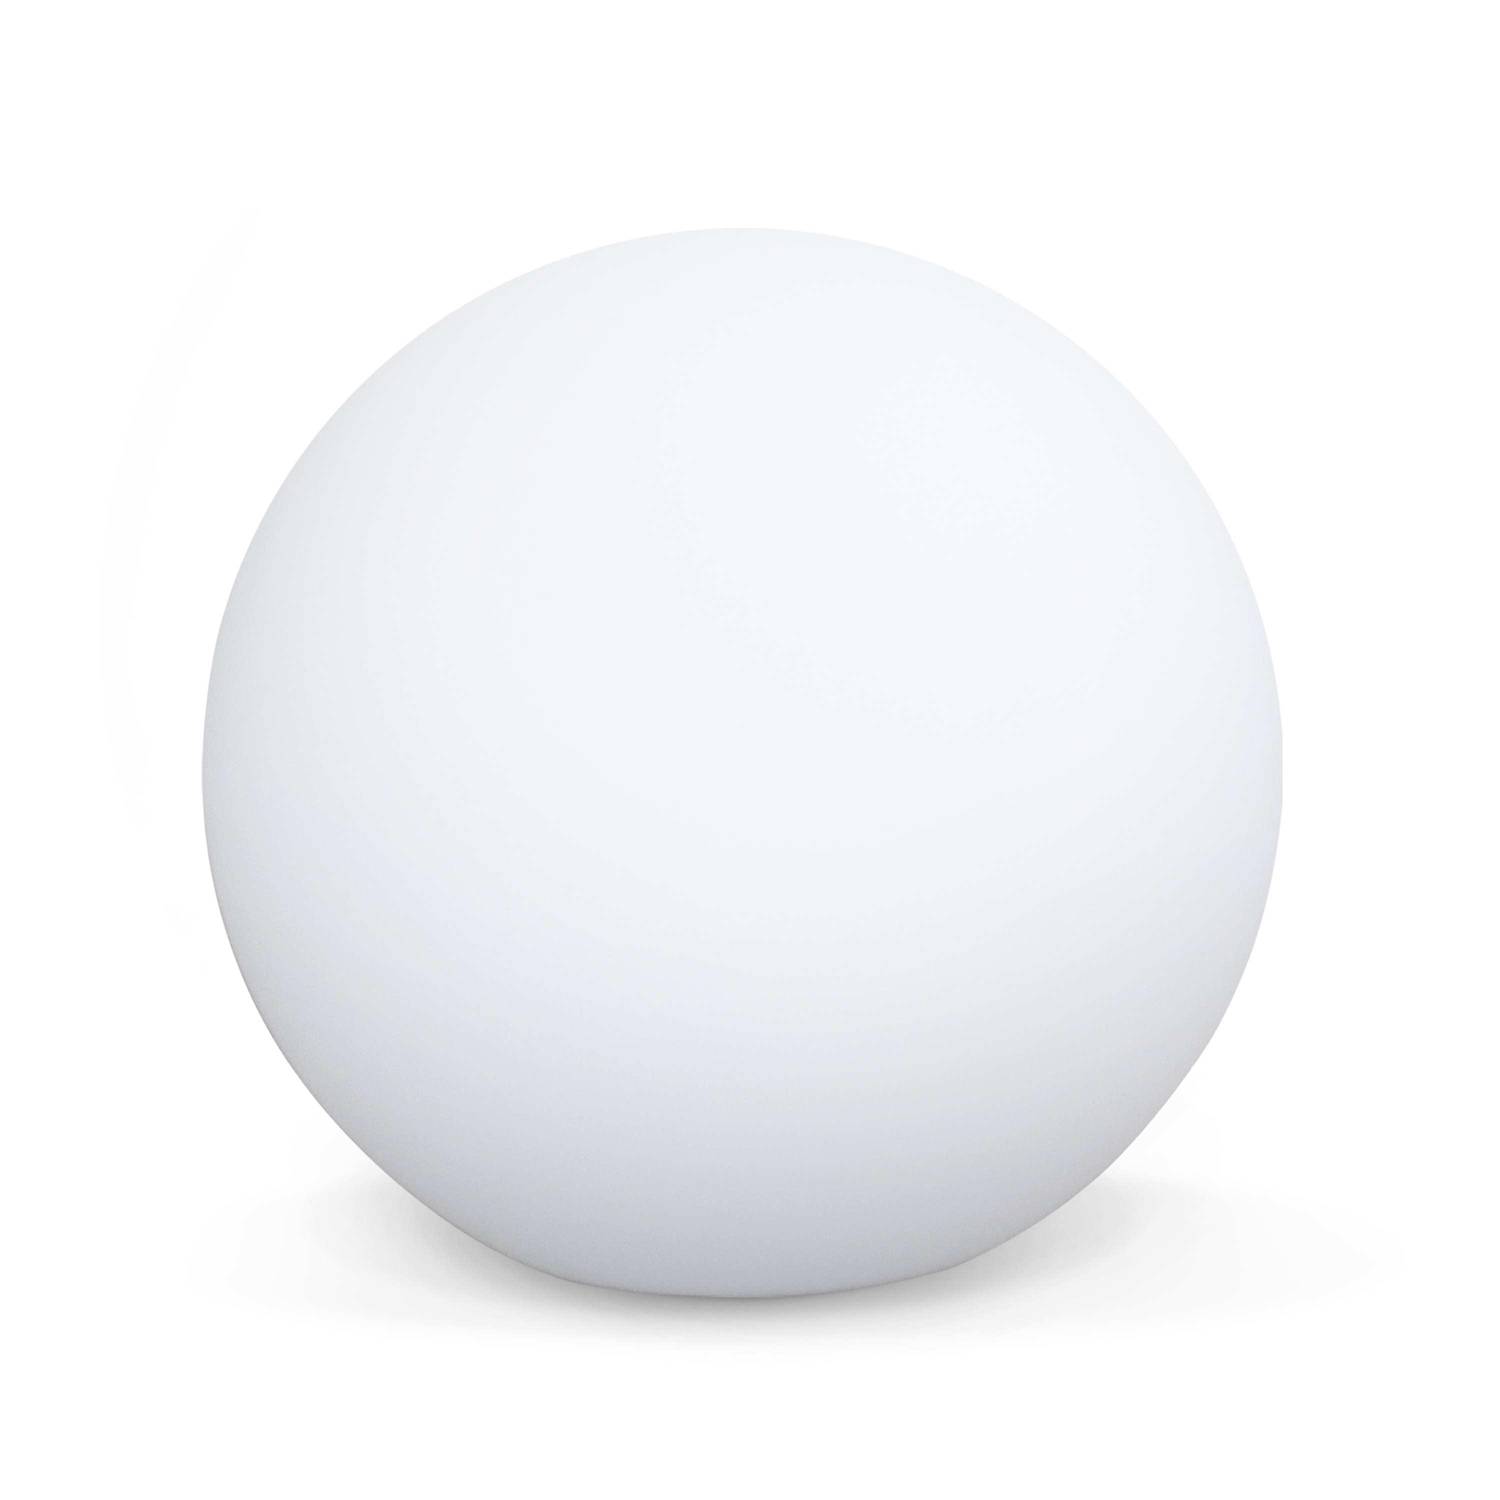  Sfera LED 60cm - Sfera luminosa decorativa, Ø60cm, bianco caldo, telecomando Photo1